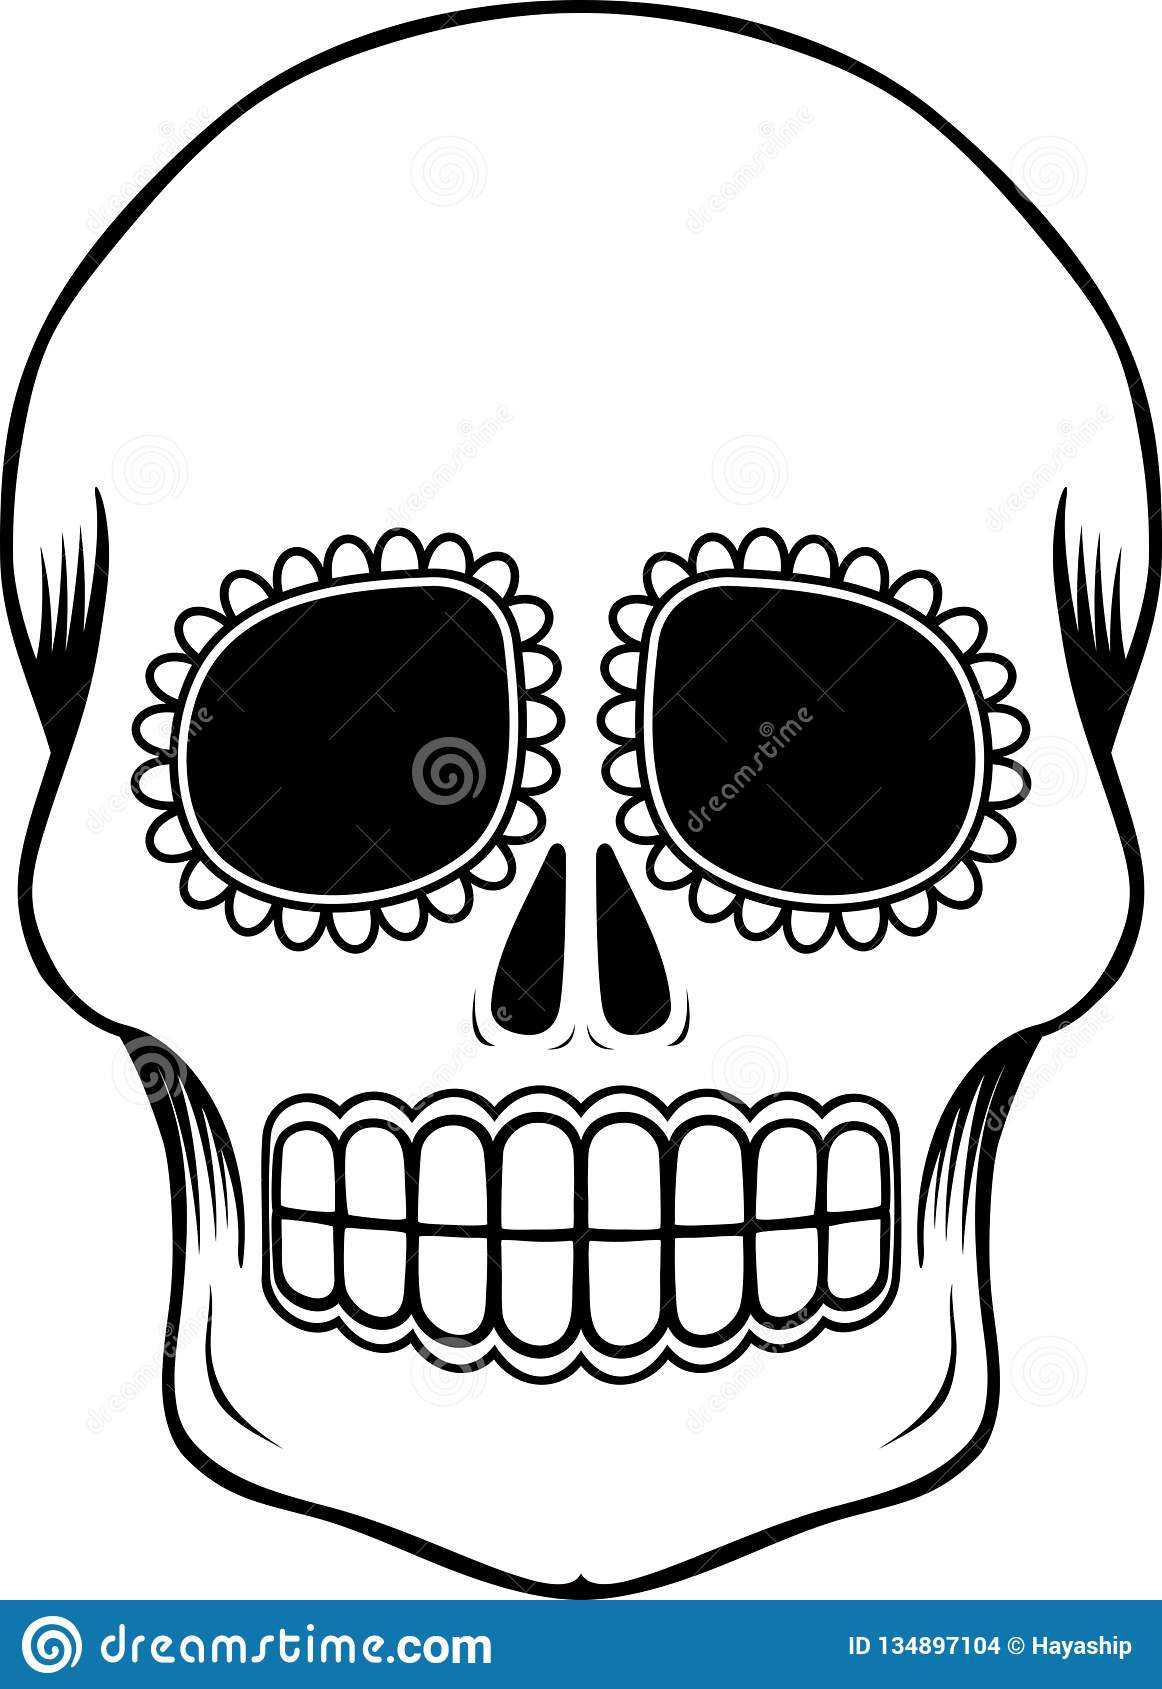 Mexican Sugar Skull Template Stock Vector – Illustration Of With Blank Sugar Skull Template